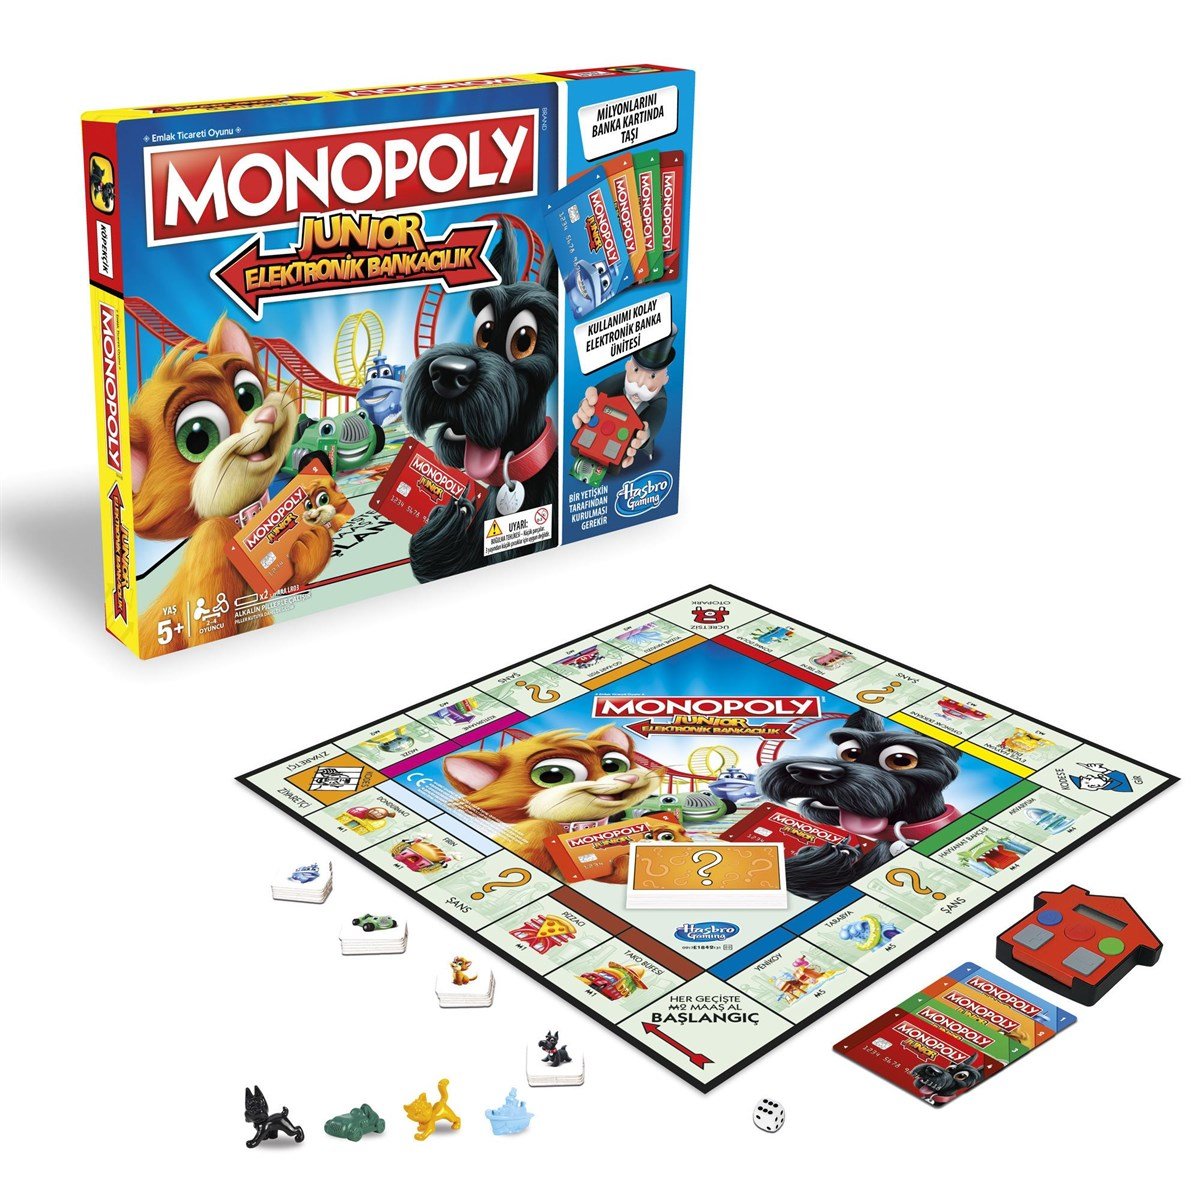 Monopoly Junior Elektronik Bankacılık E1842 - Toysall